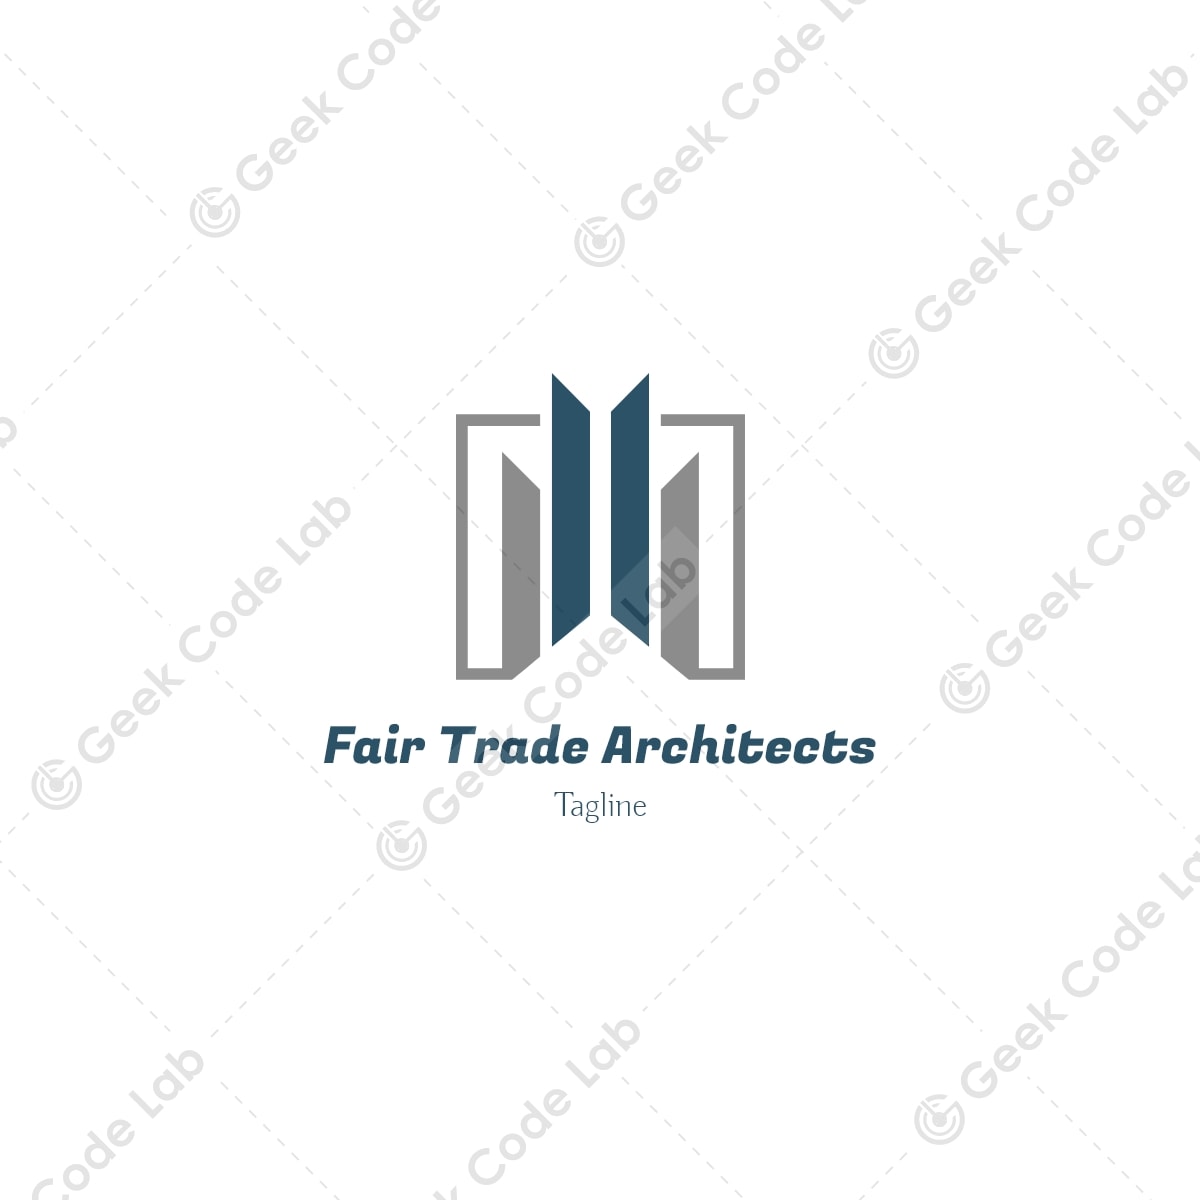 Fair Trade Architects